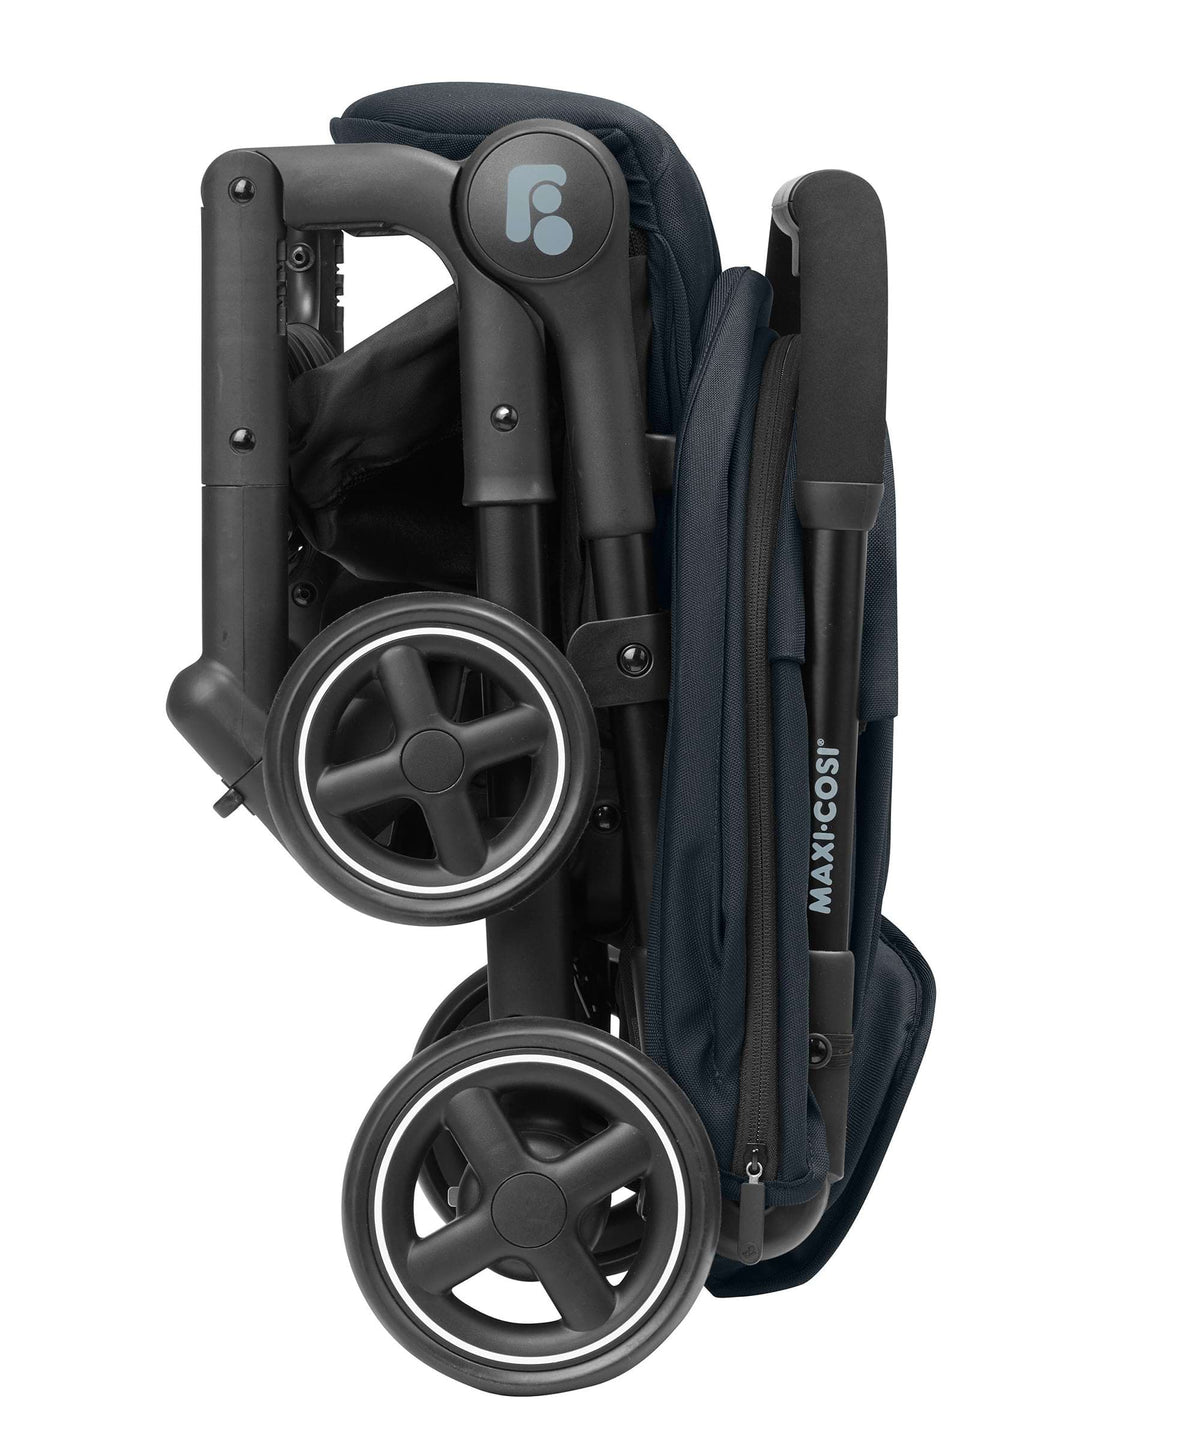 Explore the World with the Maxi-Cosi Lara² Compact Stroller